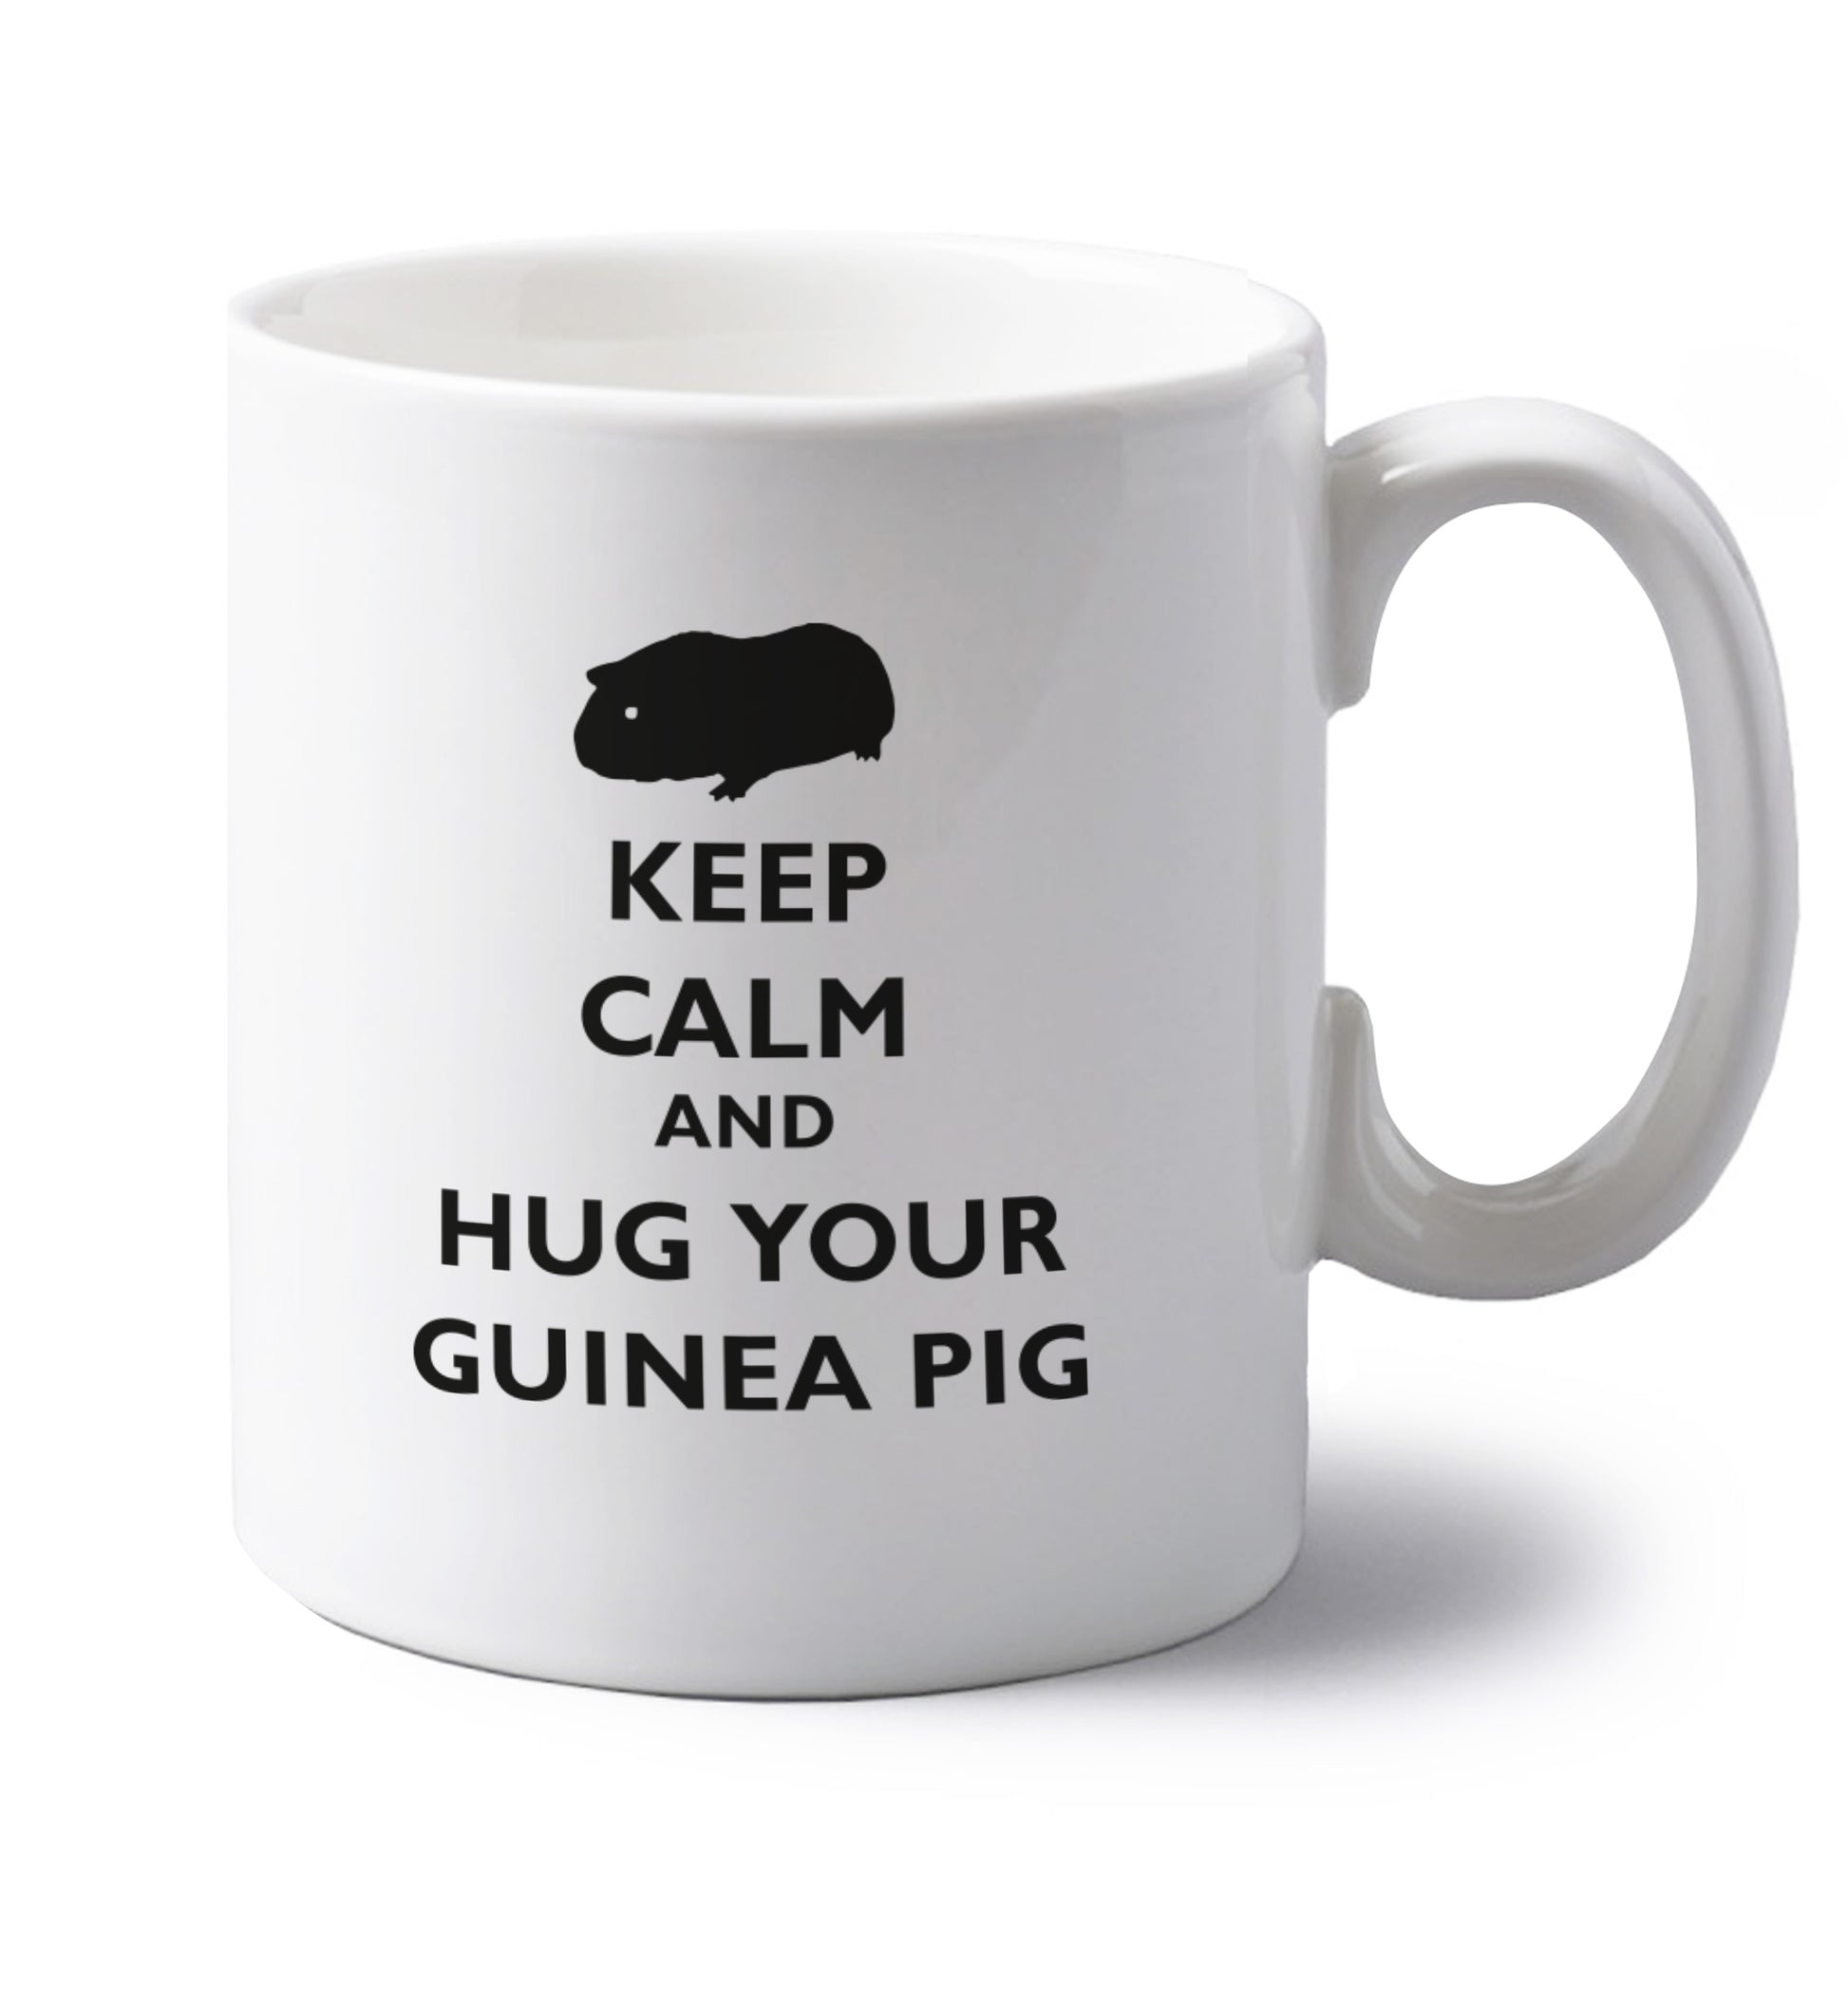 Keep calm and hug your guineapig left handed white ceramic mug 